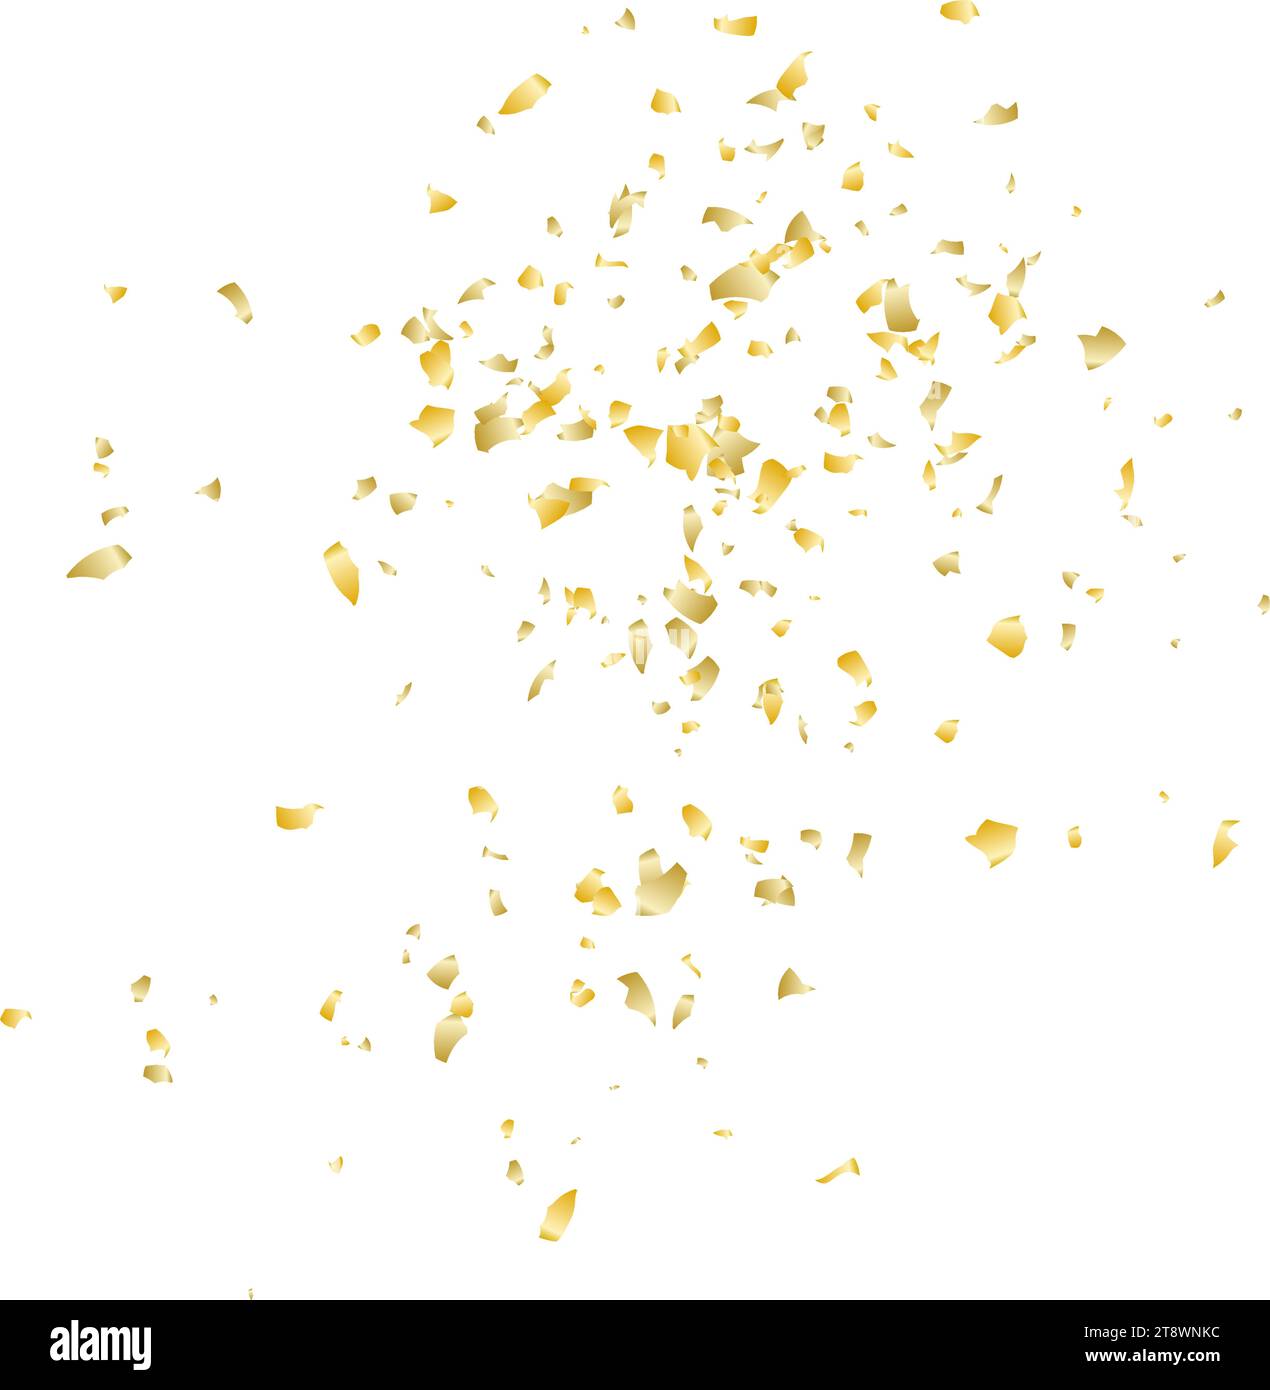 Festive golden confetti background. Vector illustration. Stock Vector